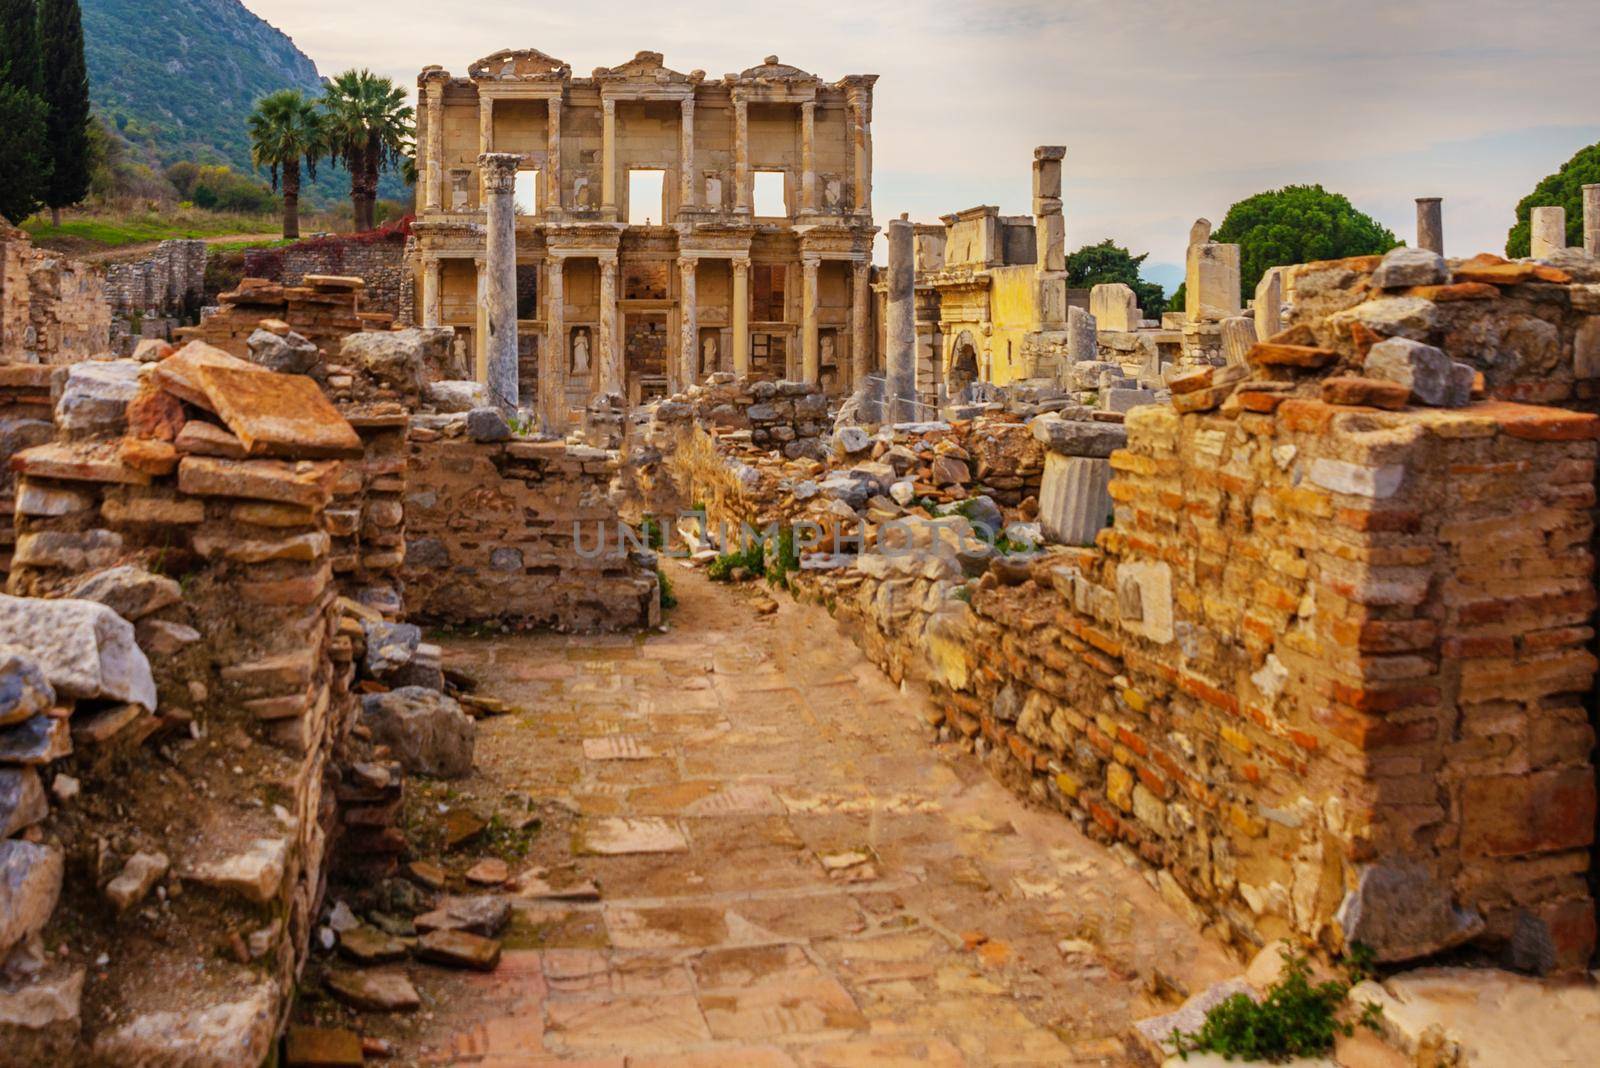 EPHESUS, SELCUK, IZMIR, TURKEY: Celsius Library in ancient city Ephesus. Most visited ancient city in Turkey.